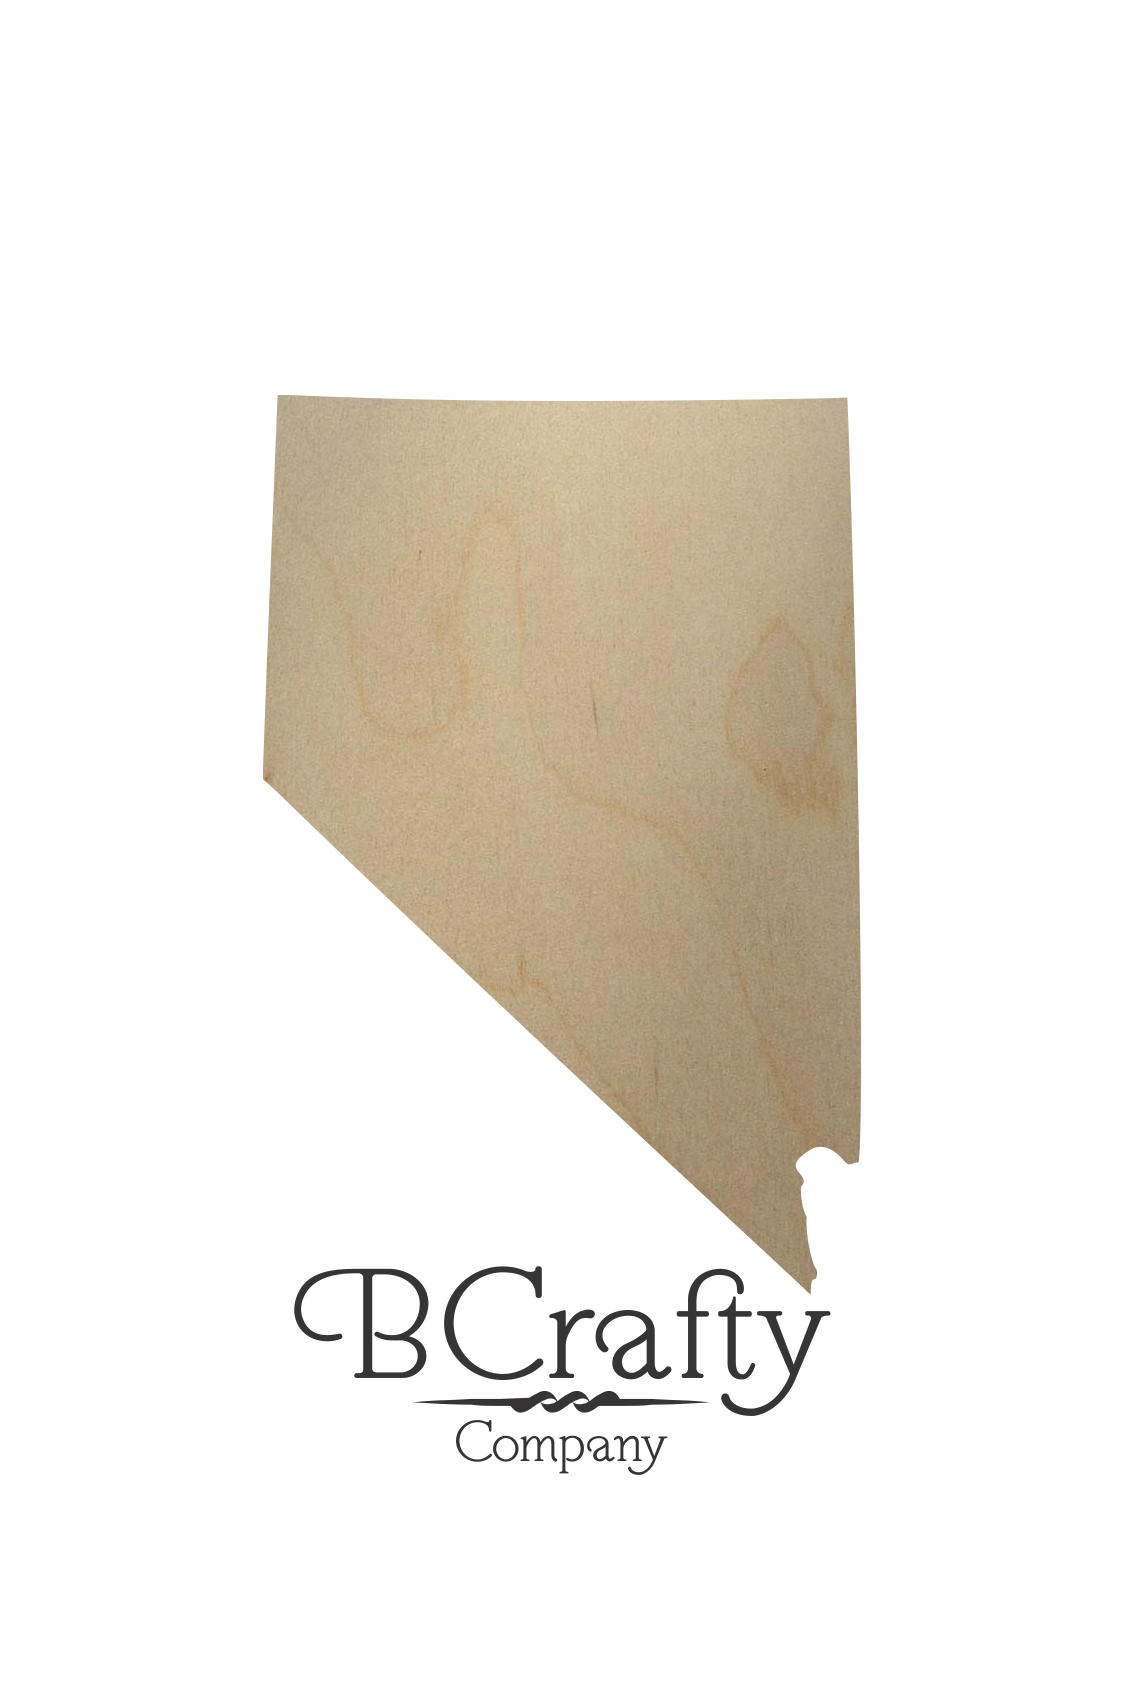 Wooden Nevada  State Shape Cutout BCrafty Company